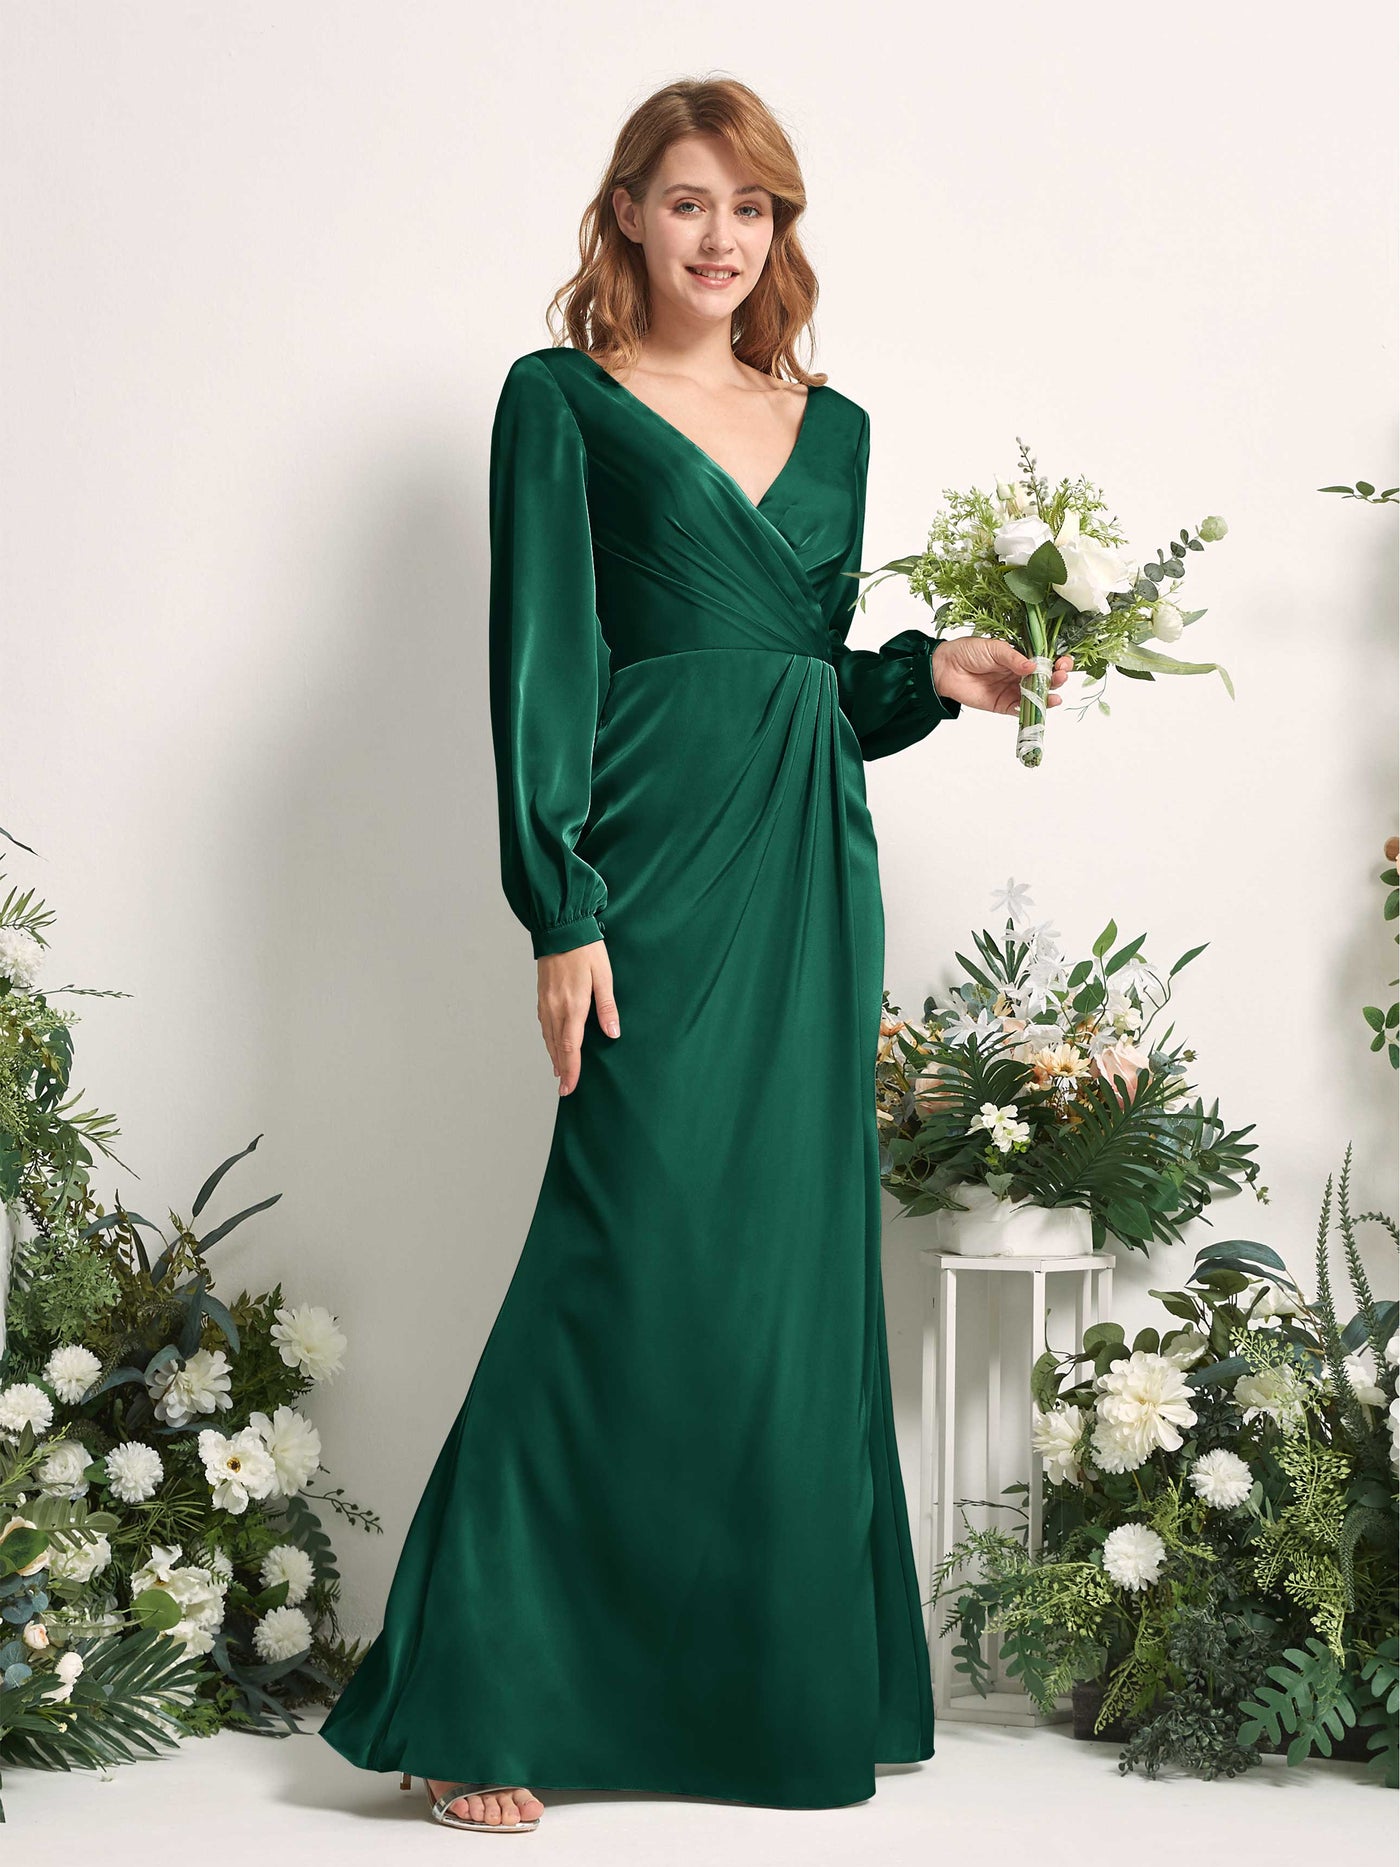 Hunter Green Bridesmaid Dresses Bridesmaid Dress Ball Gown Satin V-neck Full Length Long Sleeves Wedding Party Dress (80225129)#color_hunter-green